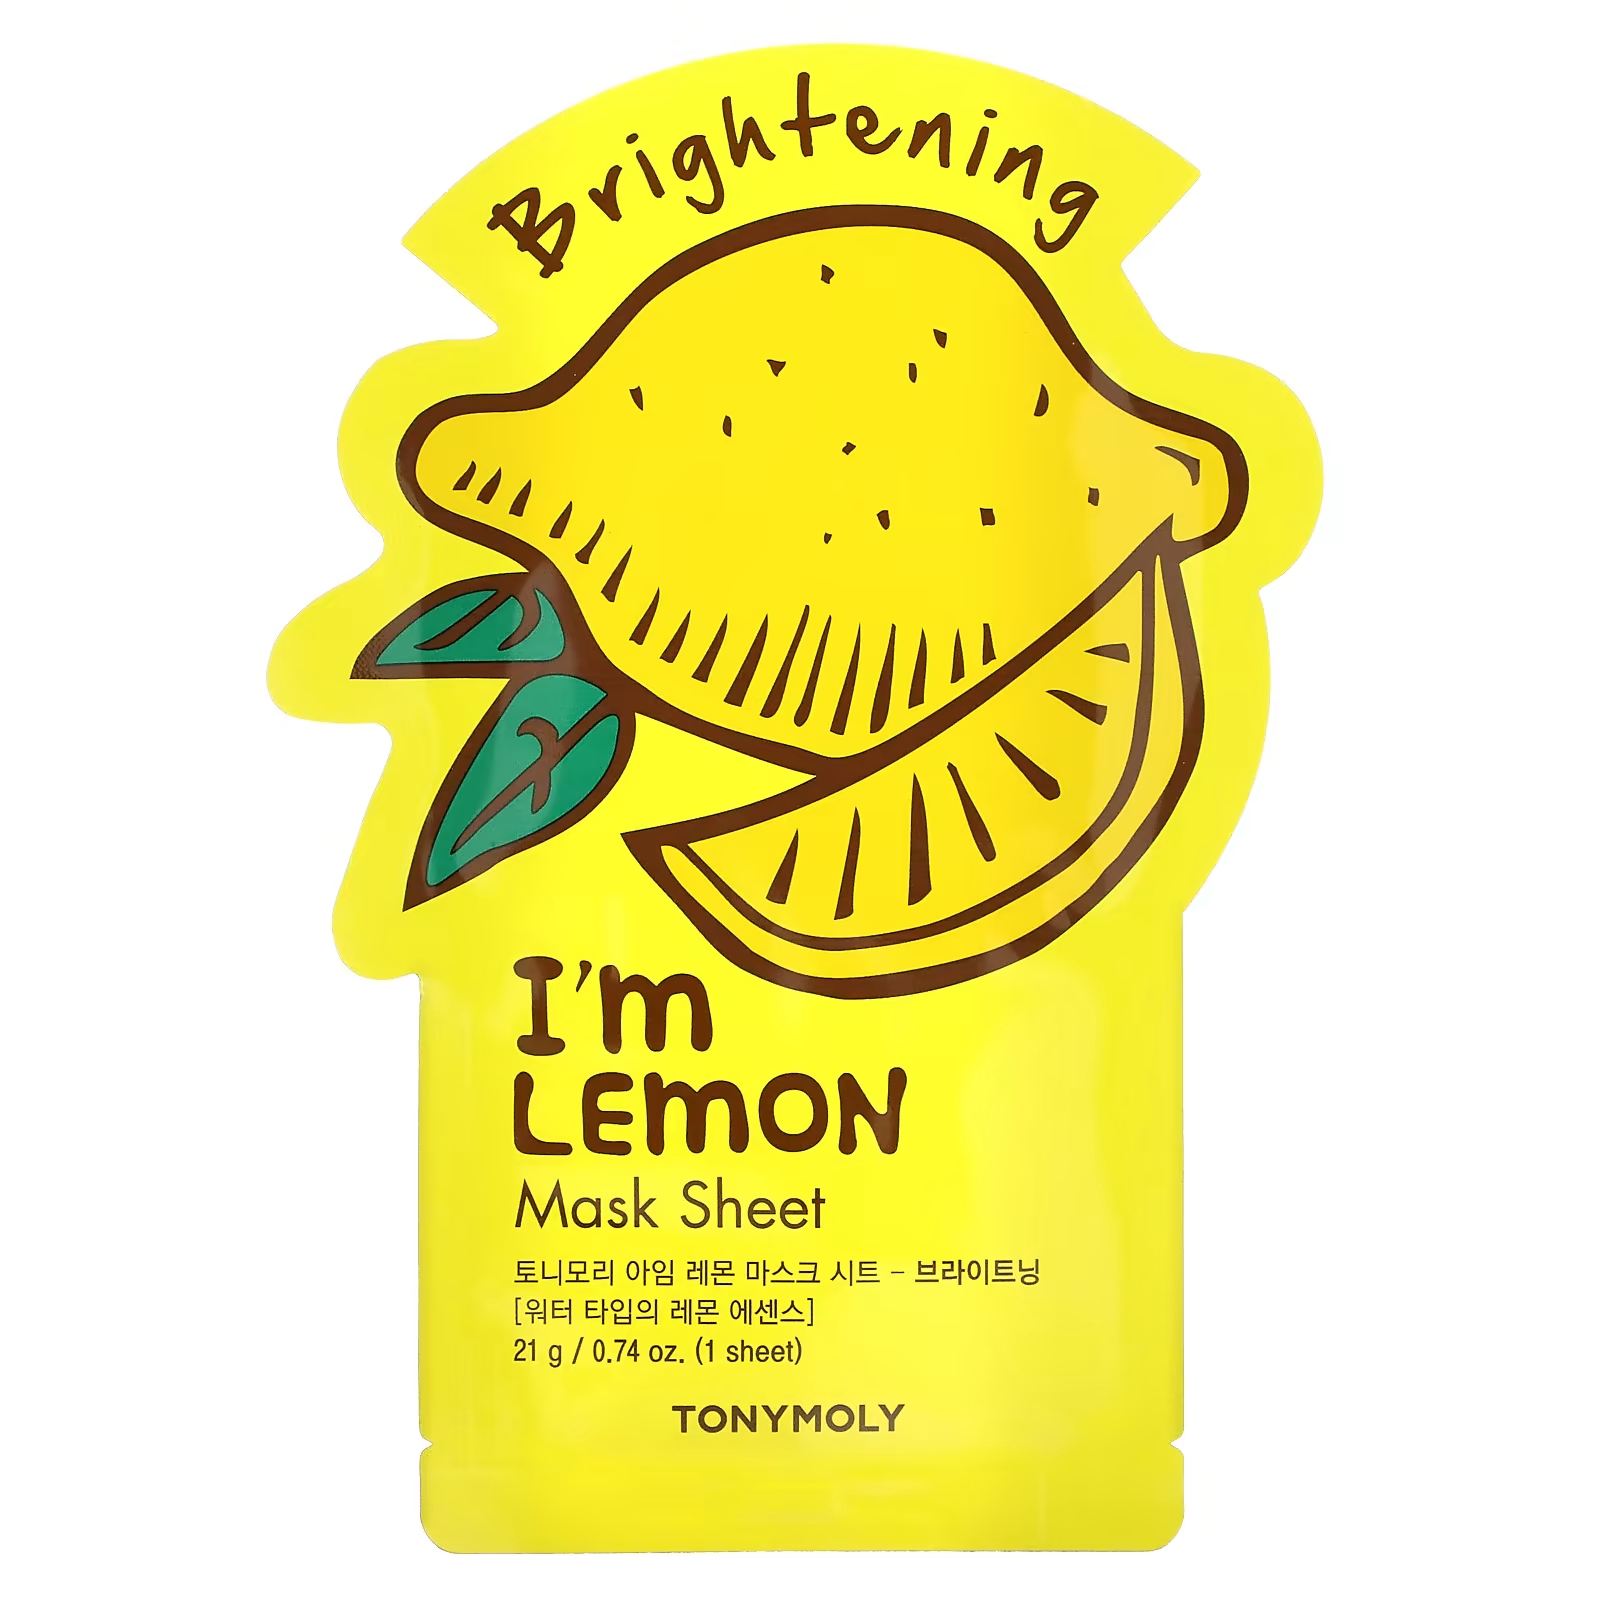 Tony Moly I'm Lemon Осветляющая косметическая маска, 1 шт., 0,74 унции (21 г) tony moly i m coconut увлажняющая косметическая маска 1 шт 0 74 унции 21 г